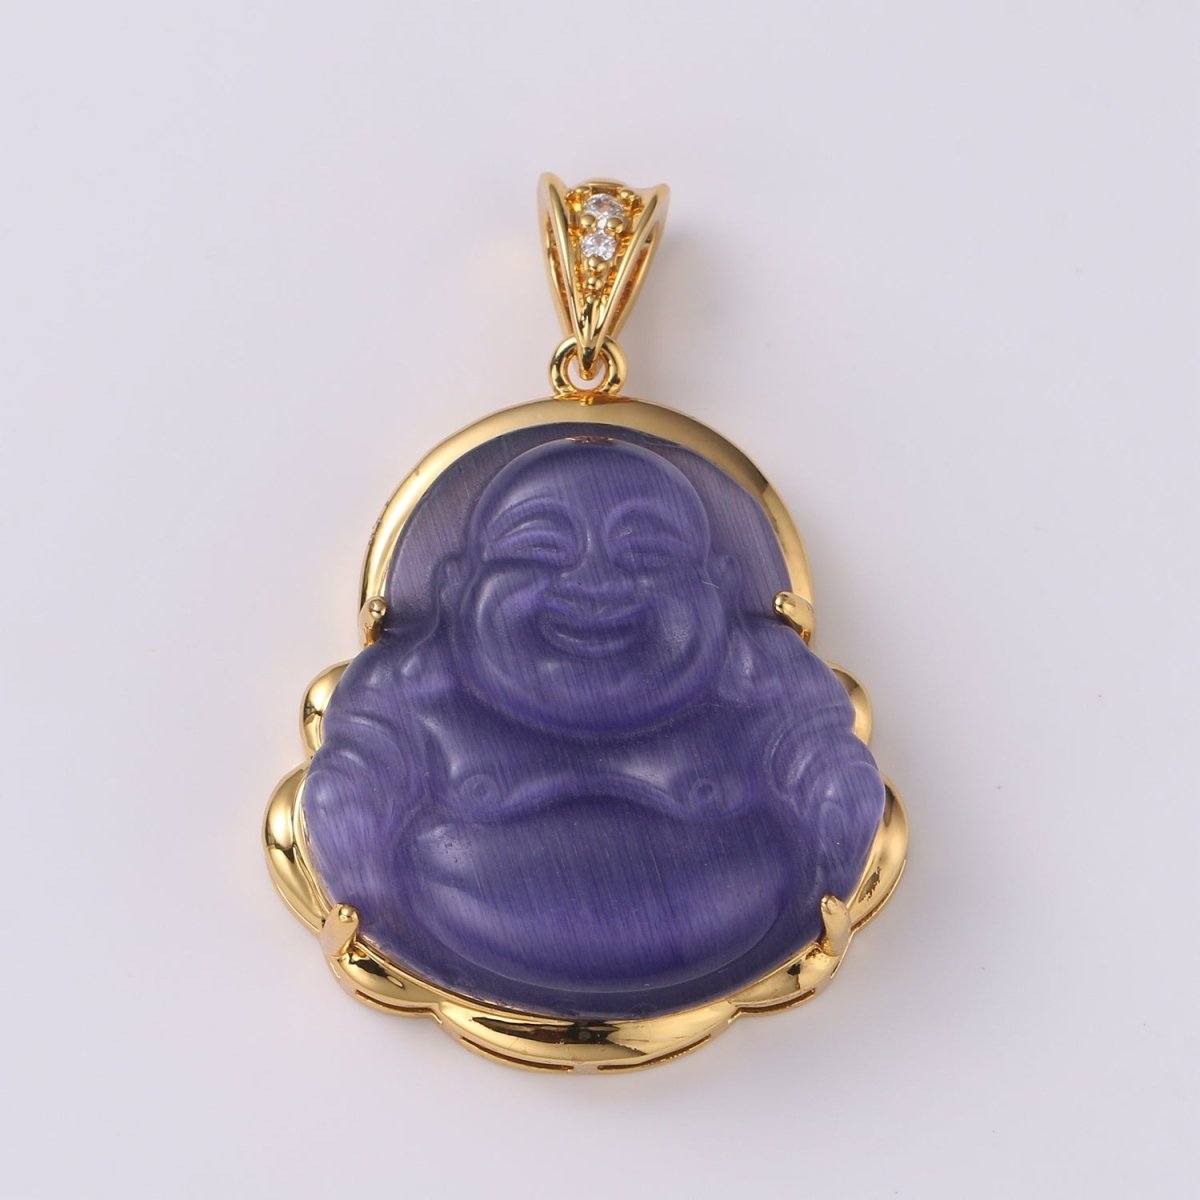 1pc 24k Gold Filled Buddha Pendant Natural Wisdom Meaning Gold Buddha Necklace Charm Laughing Buddha Buddhism Religious Jewelry Making O-152 ~ O-163 O-241 O-242 - DLUXCA